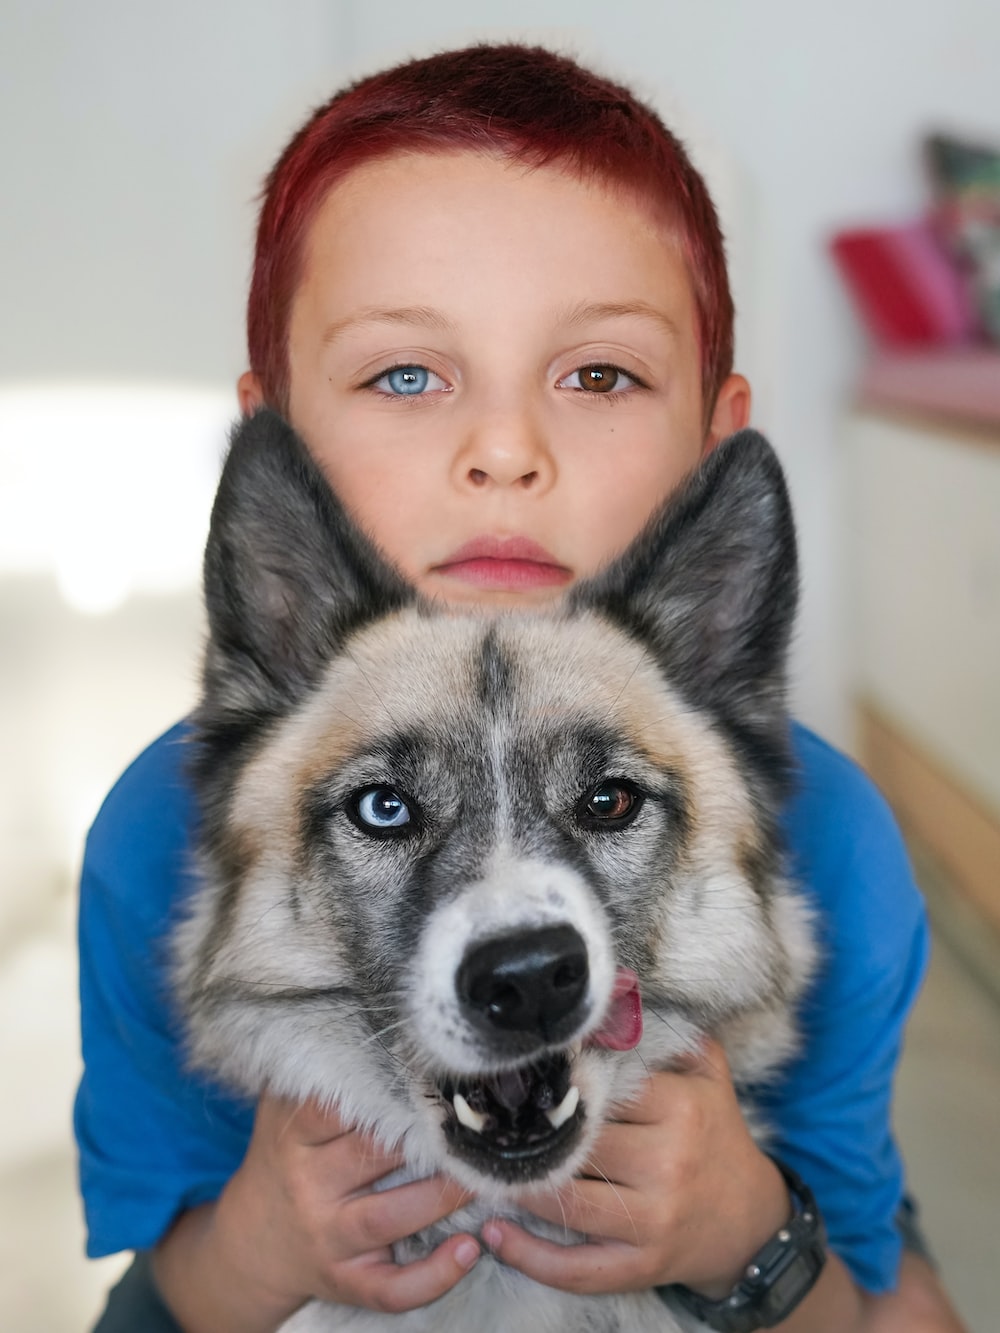 People 1000x1333 dog eyes children heterochromia portrait display